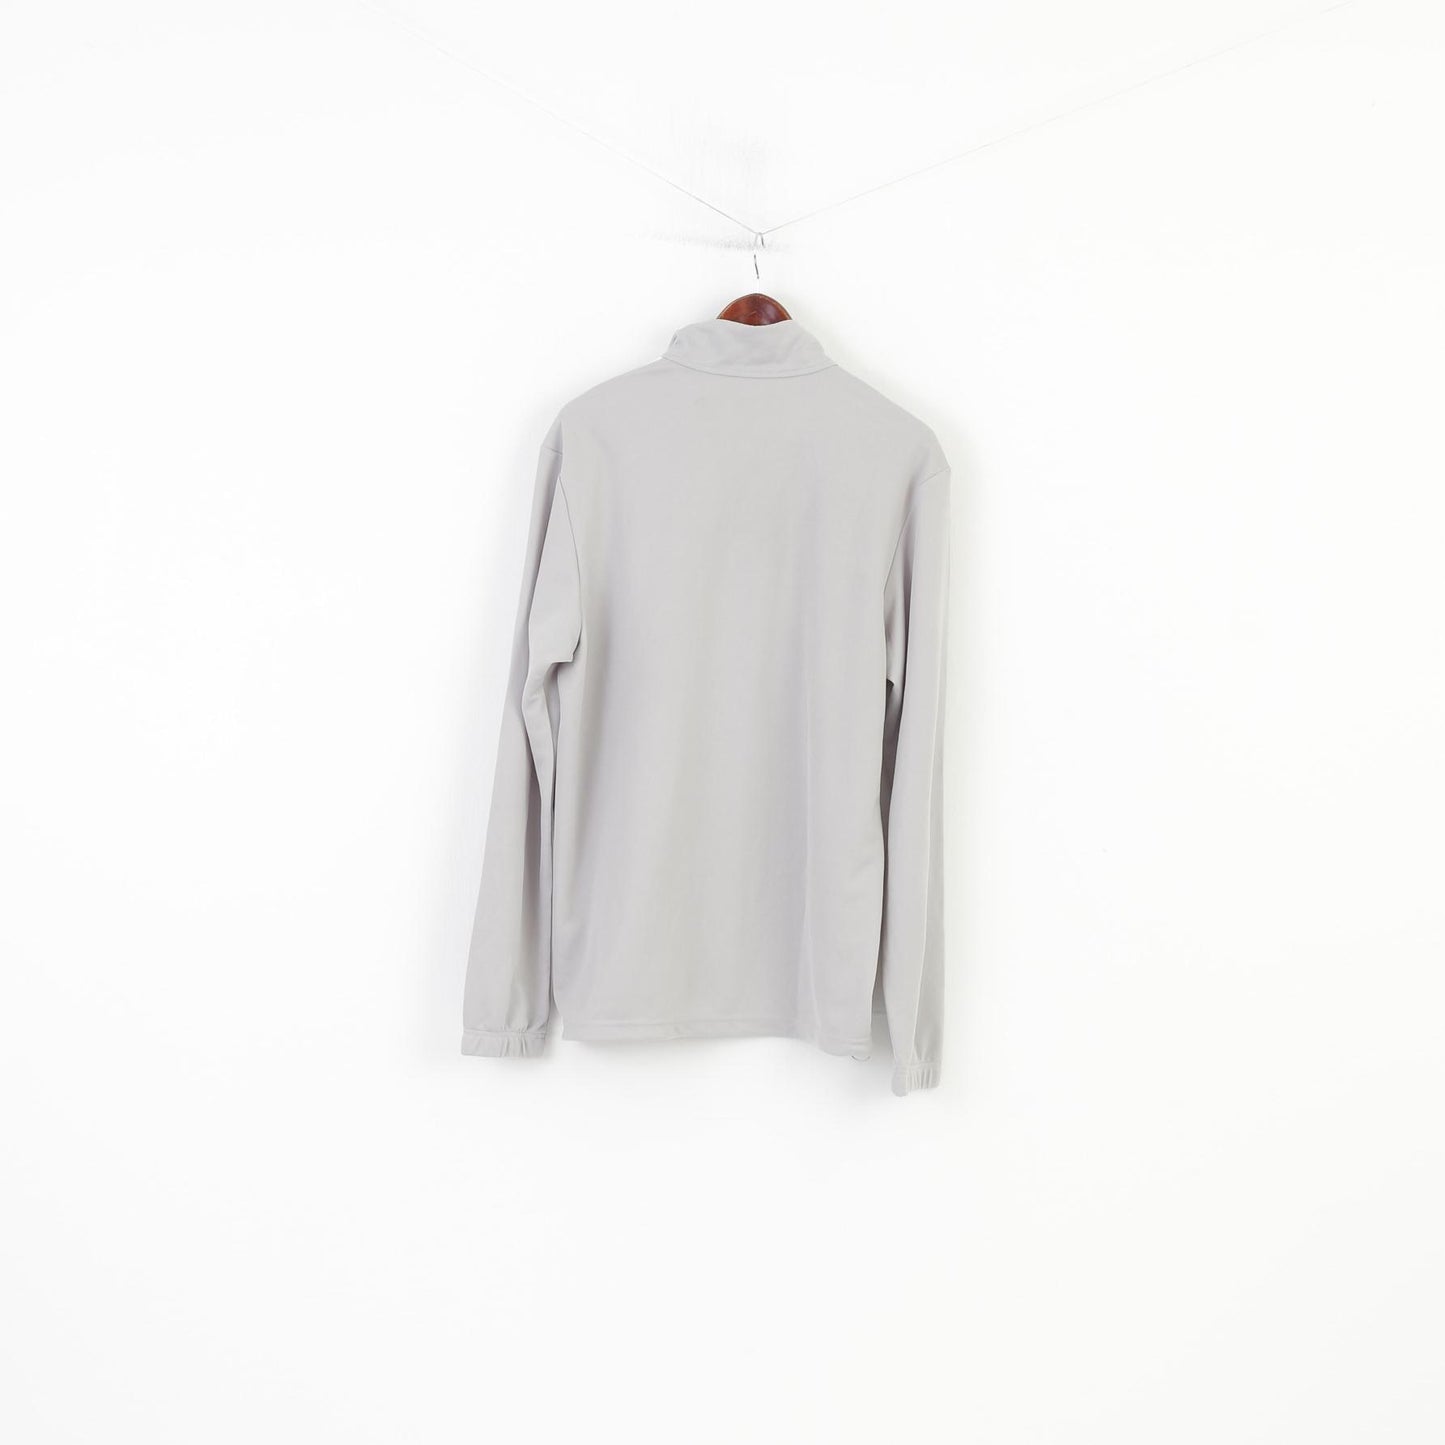 Adidas Homme L Sweatshirt Gris Zip Neck Polyester Vintage Collar Top